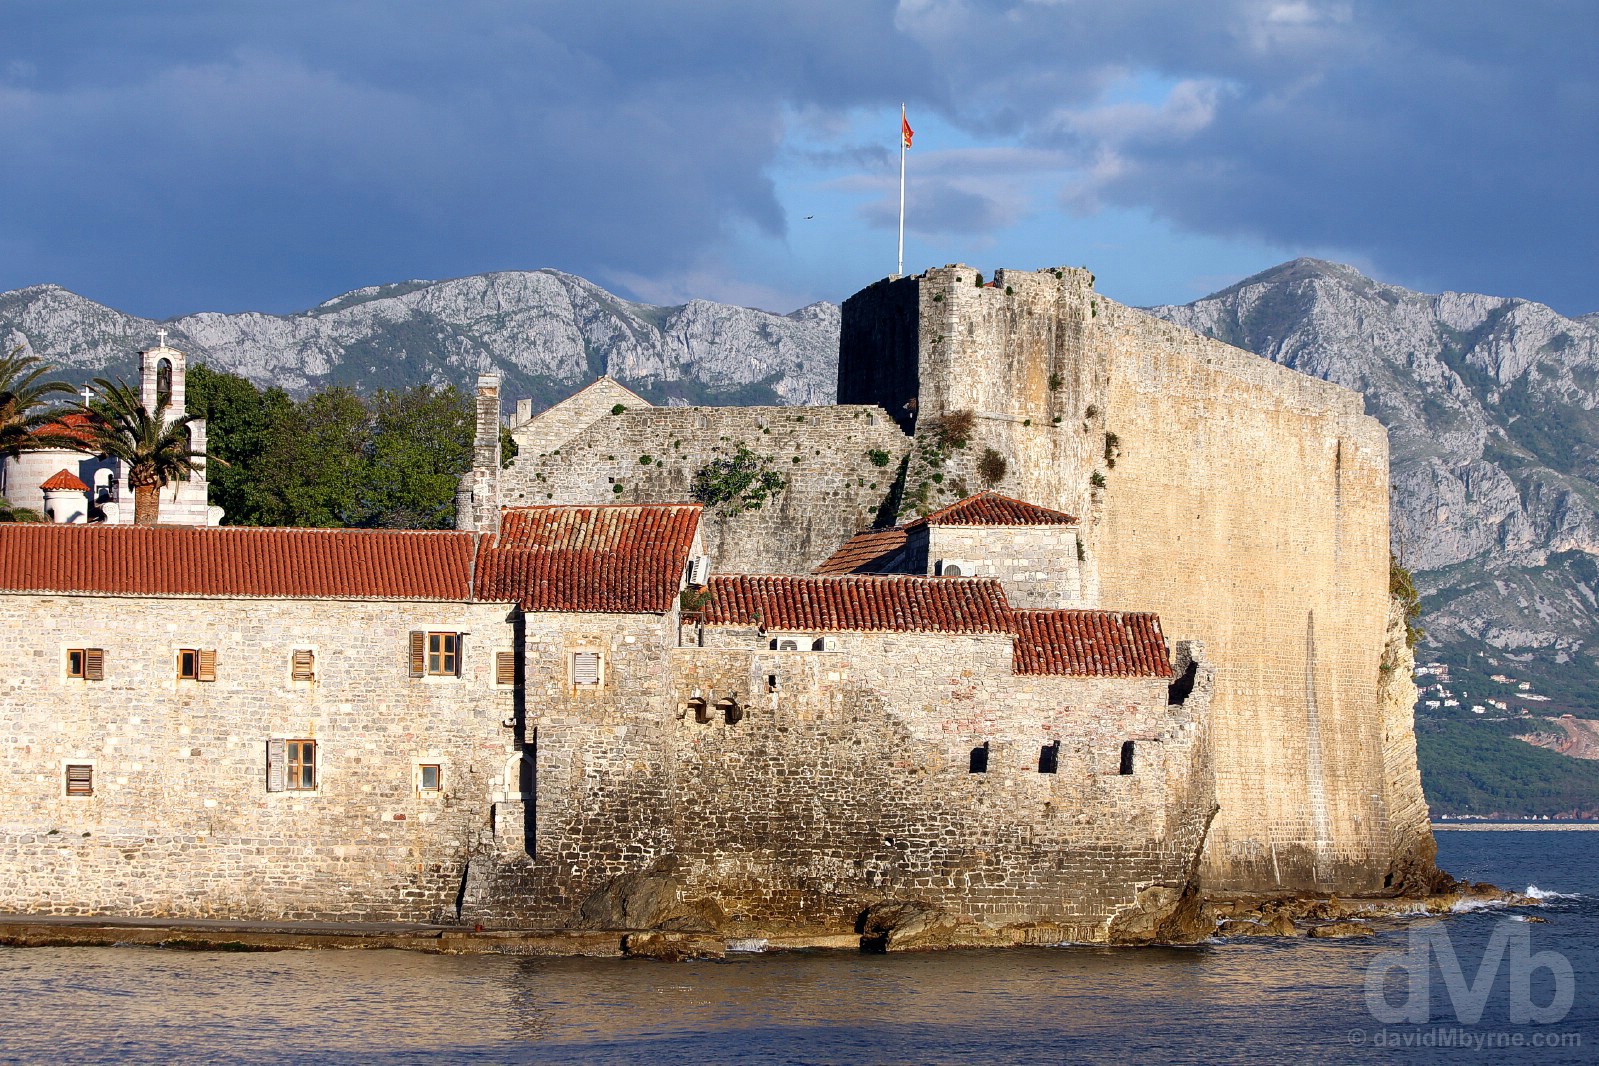 The walls of Stari Grad (Old Town) & the Citadela Fortress in Budva, Montenegro. April 20, 2017.